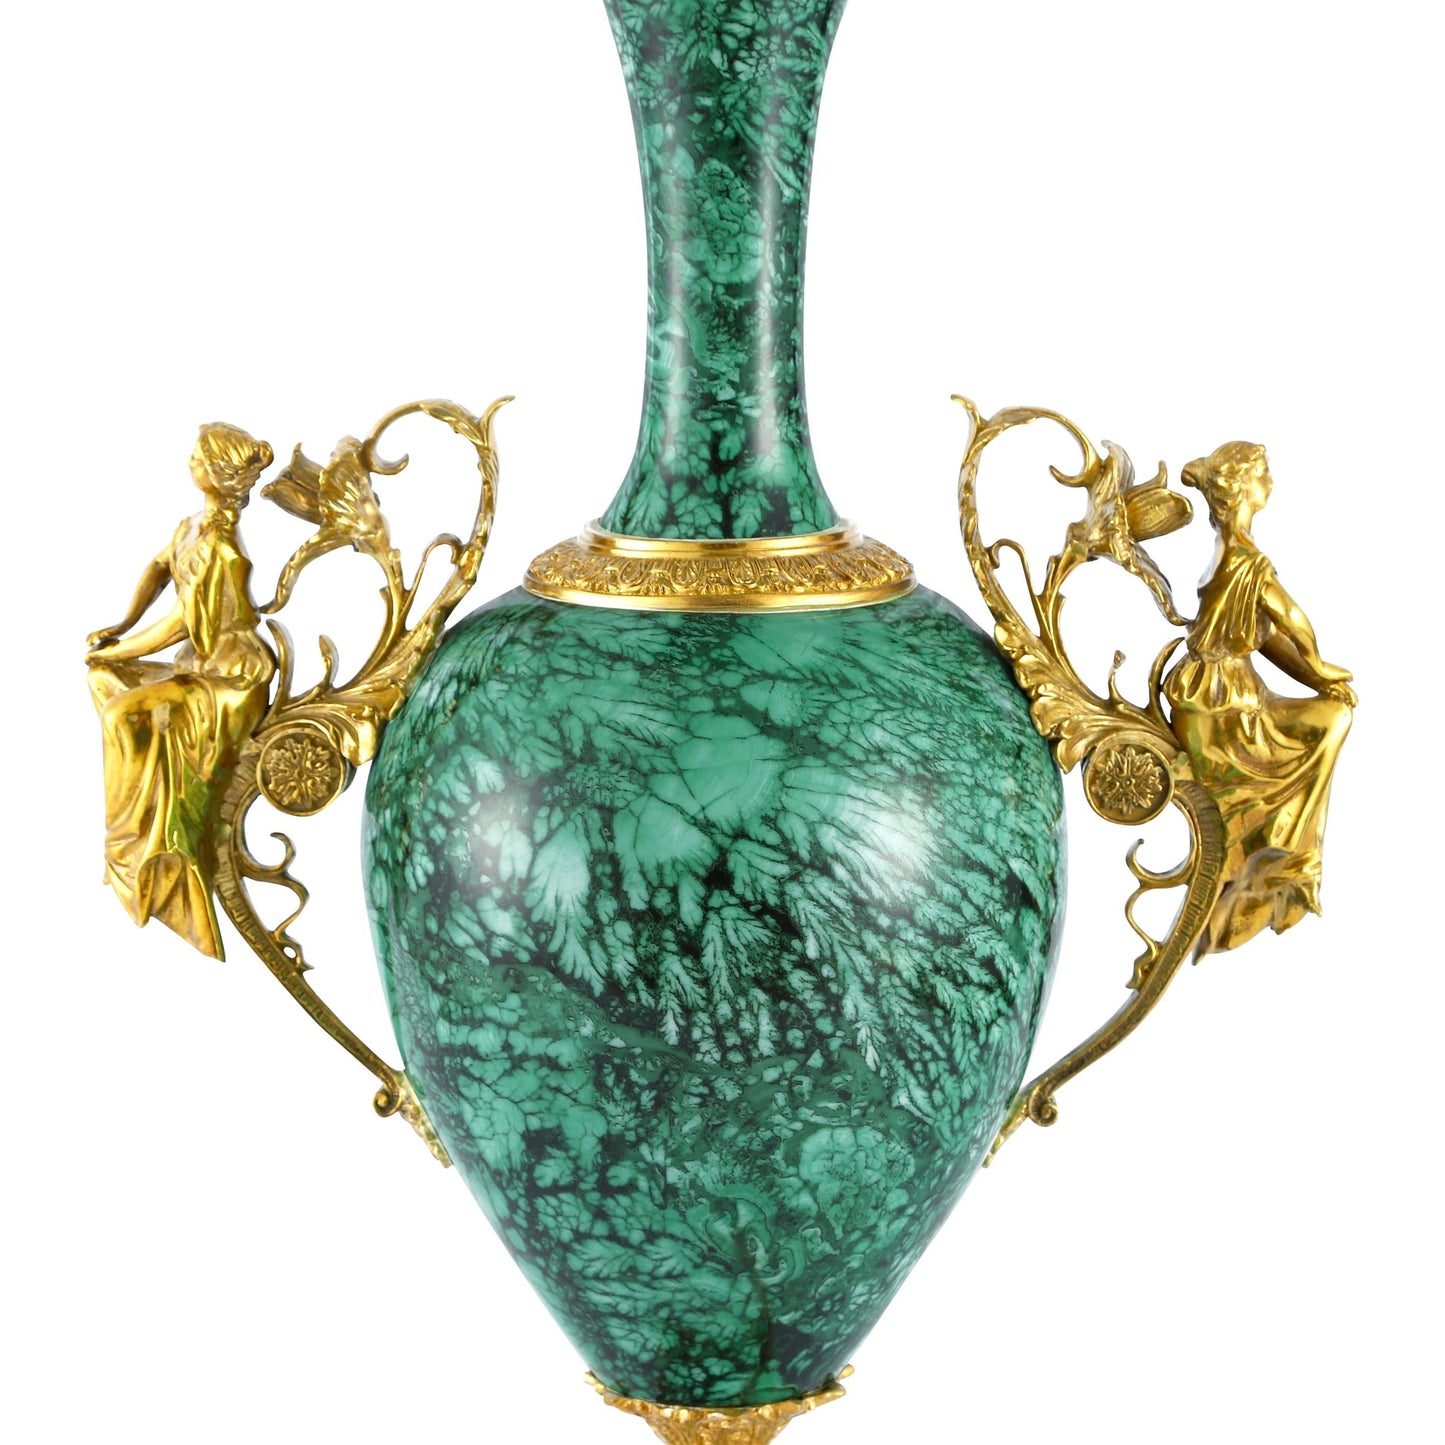 DECOELEVEN ™ Bronze and Porcelain Vase in Classic Green